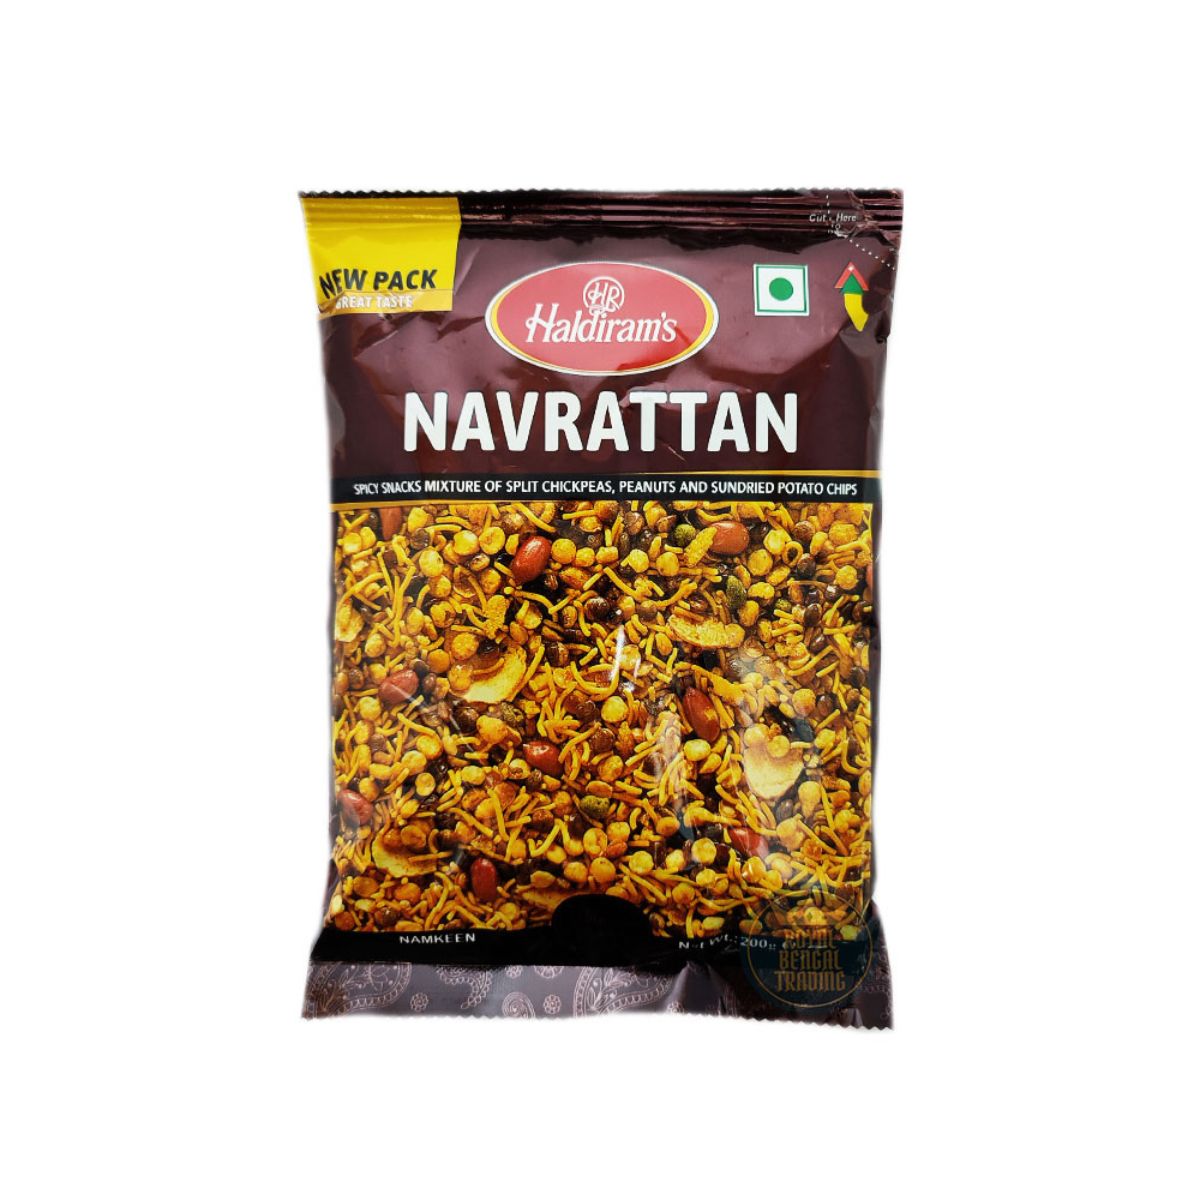 Haldiram's Navrattan - Spicy Snacks Mixture Of Split chickpeas, Peanuts And Sundried Potato Chips - 200g